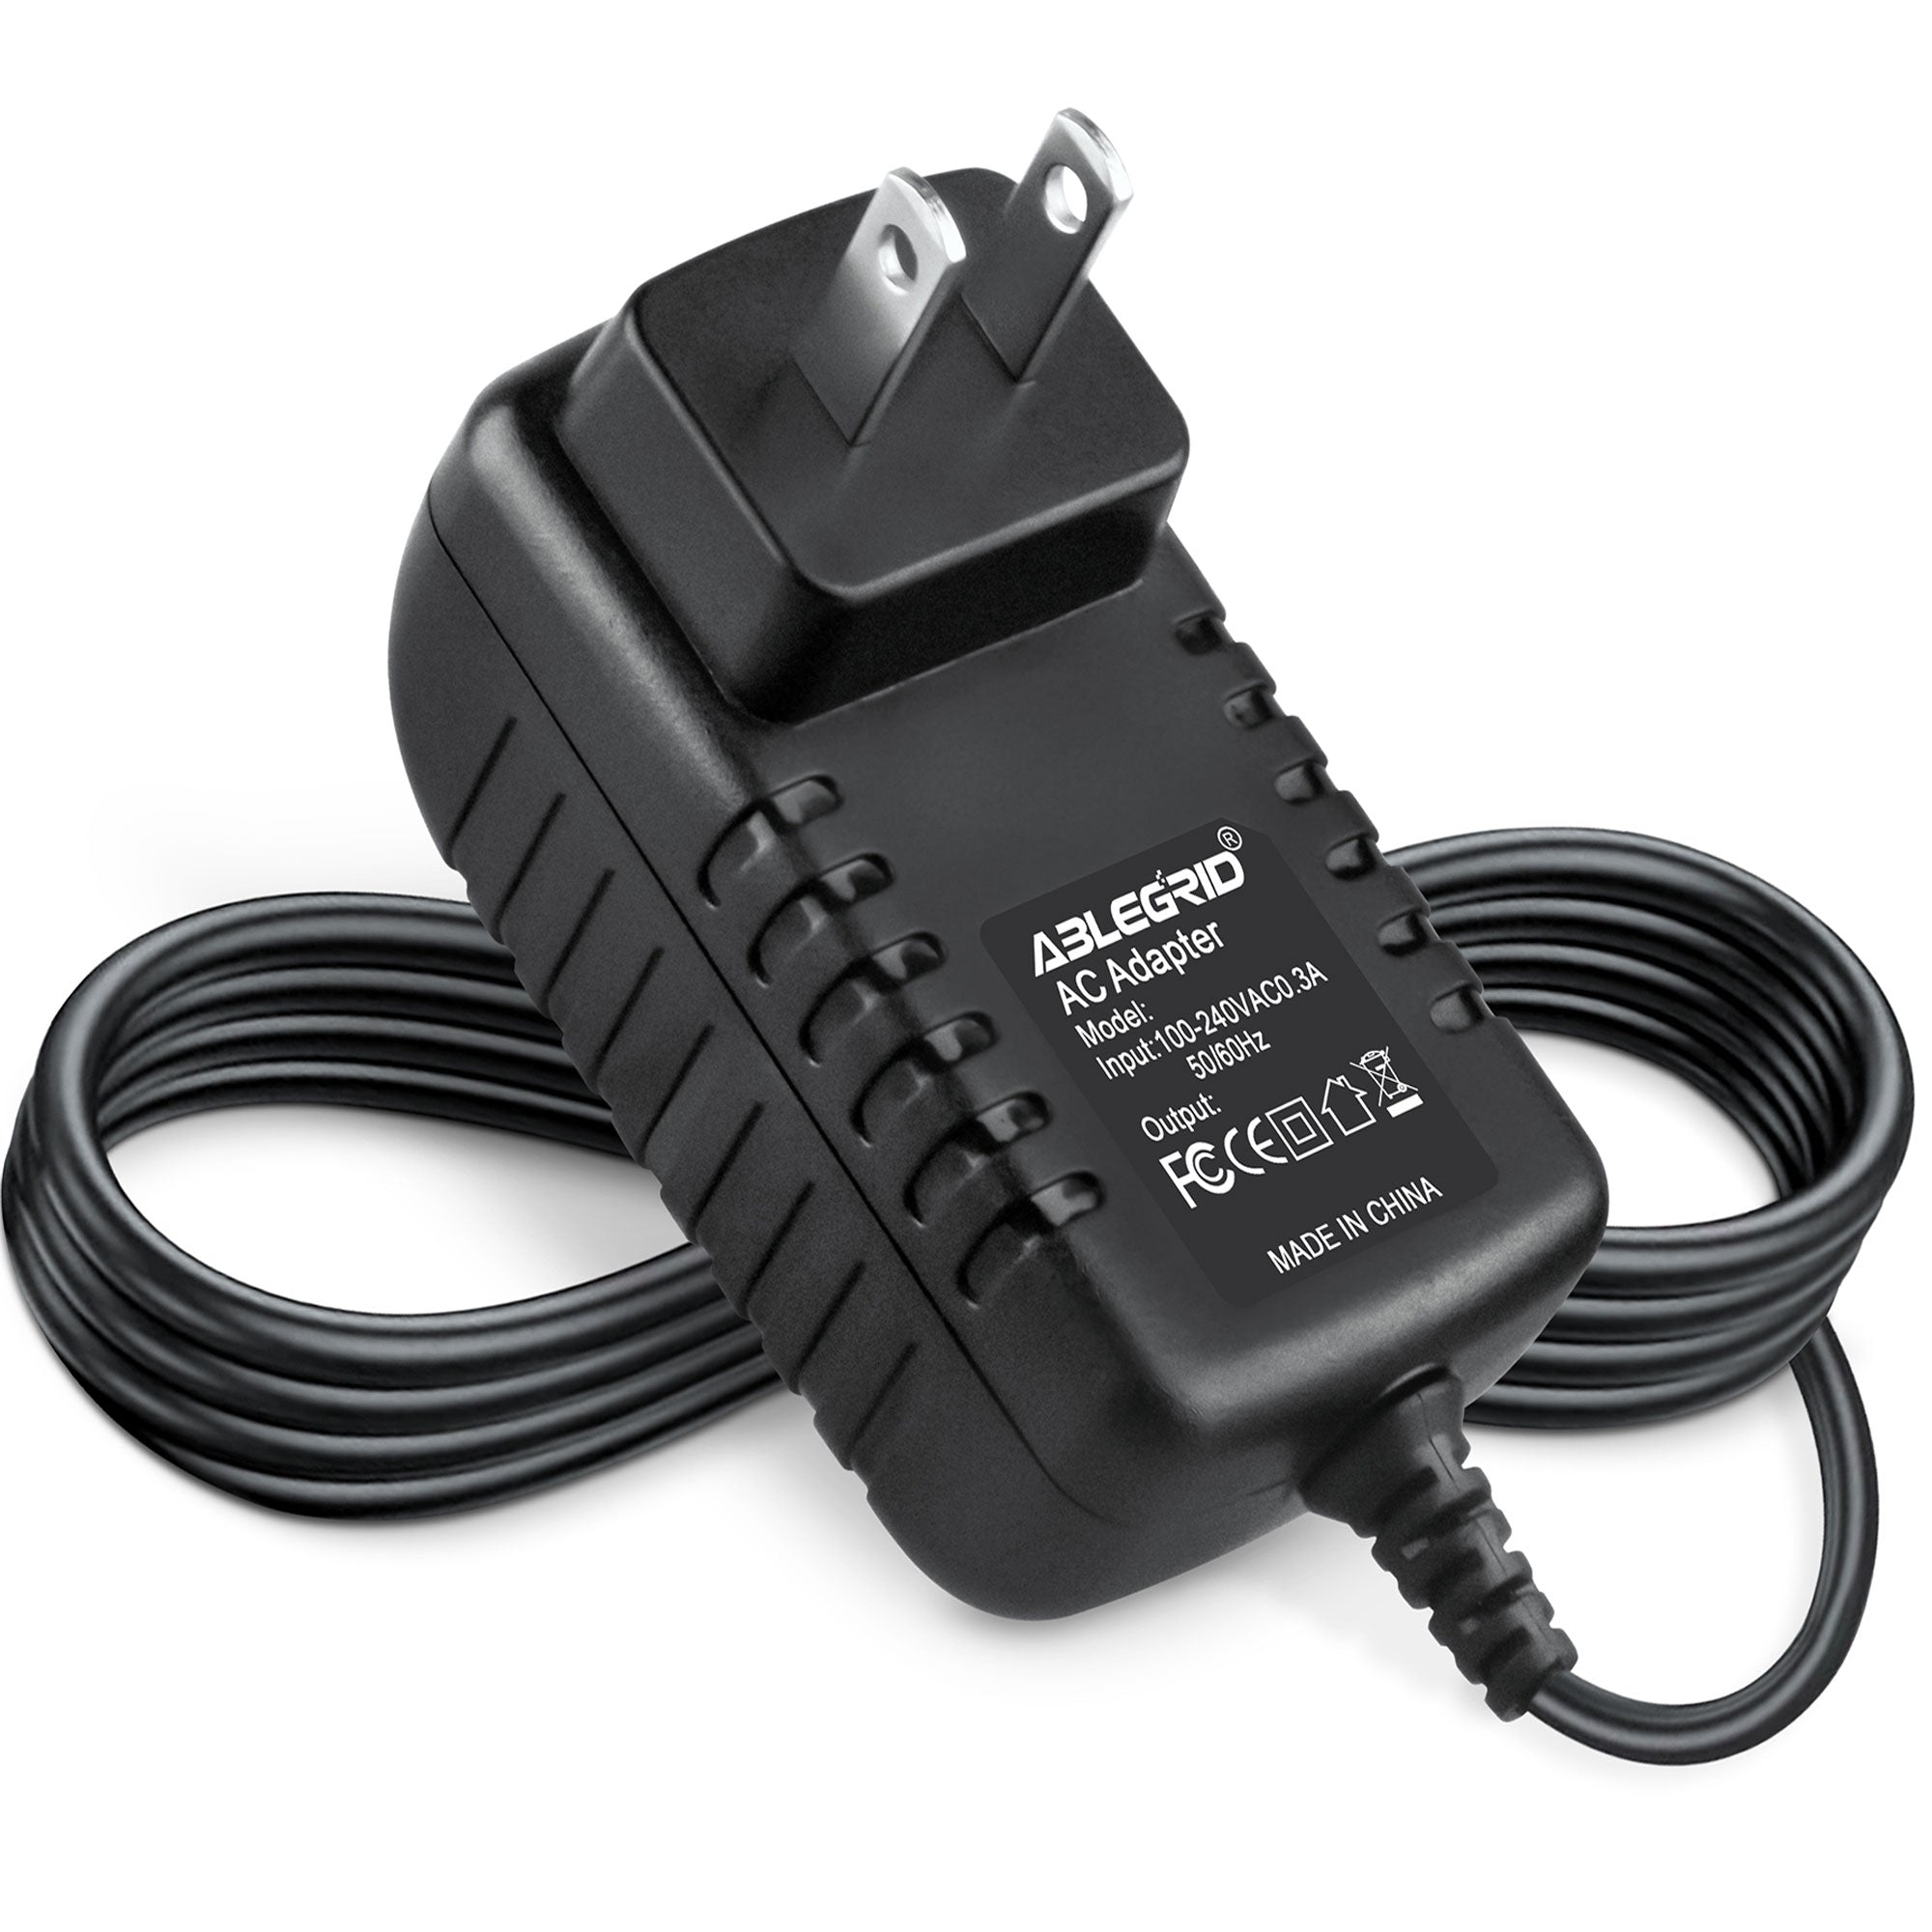 AbleGrid 6V - 6.5V AC/DC Adapter for Siemens Gigaset C300A C380 C385 C470 C475 C590 C595 CX470 CX470IP CX475 CX475IP C39280-Z4-C70 L50680-Z4-C70 C39280-Z4-C707 DECT 6.0 Cordless Phone Base Unit